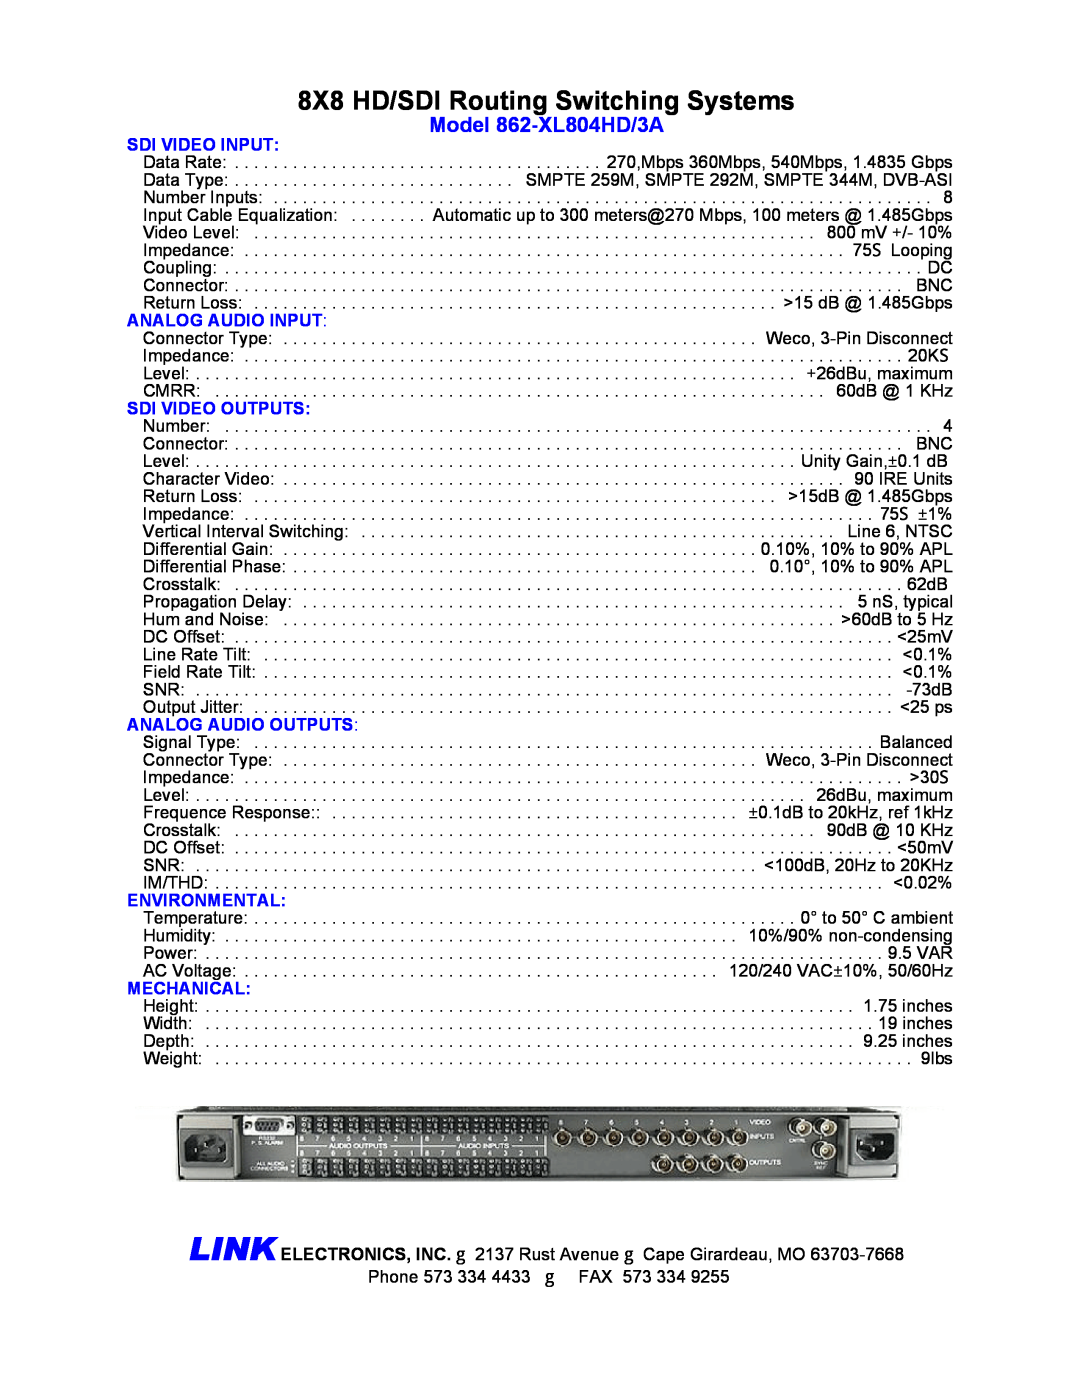 Link electronic 862-XL804HD/3A Sdi Video Input, Analog Audio Input, Sdi Video Outputs, Analog Audio Outputs, Environmental 